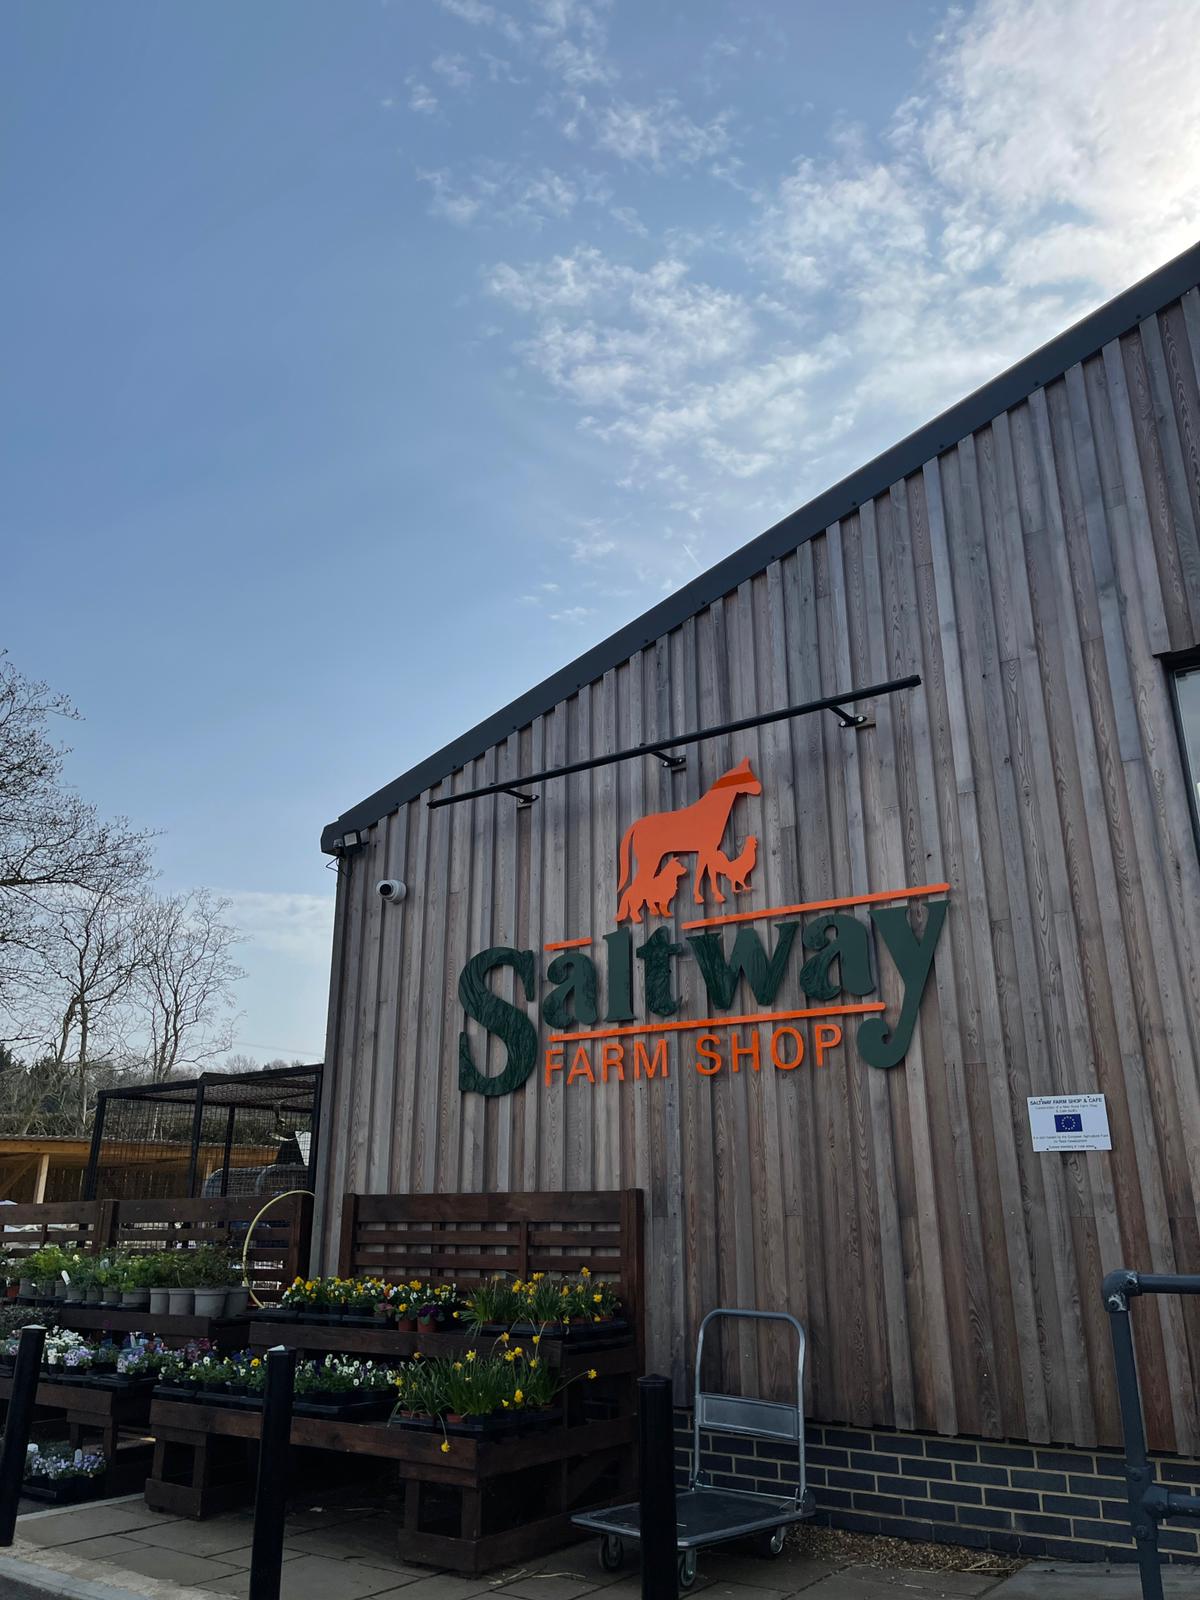 Saltway Farm Shop